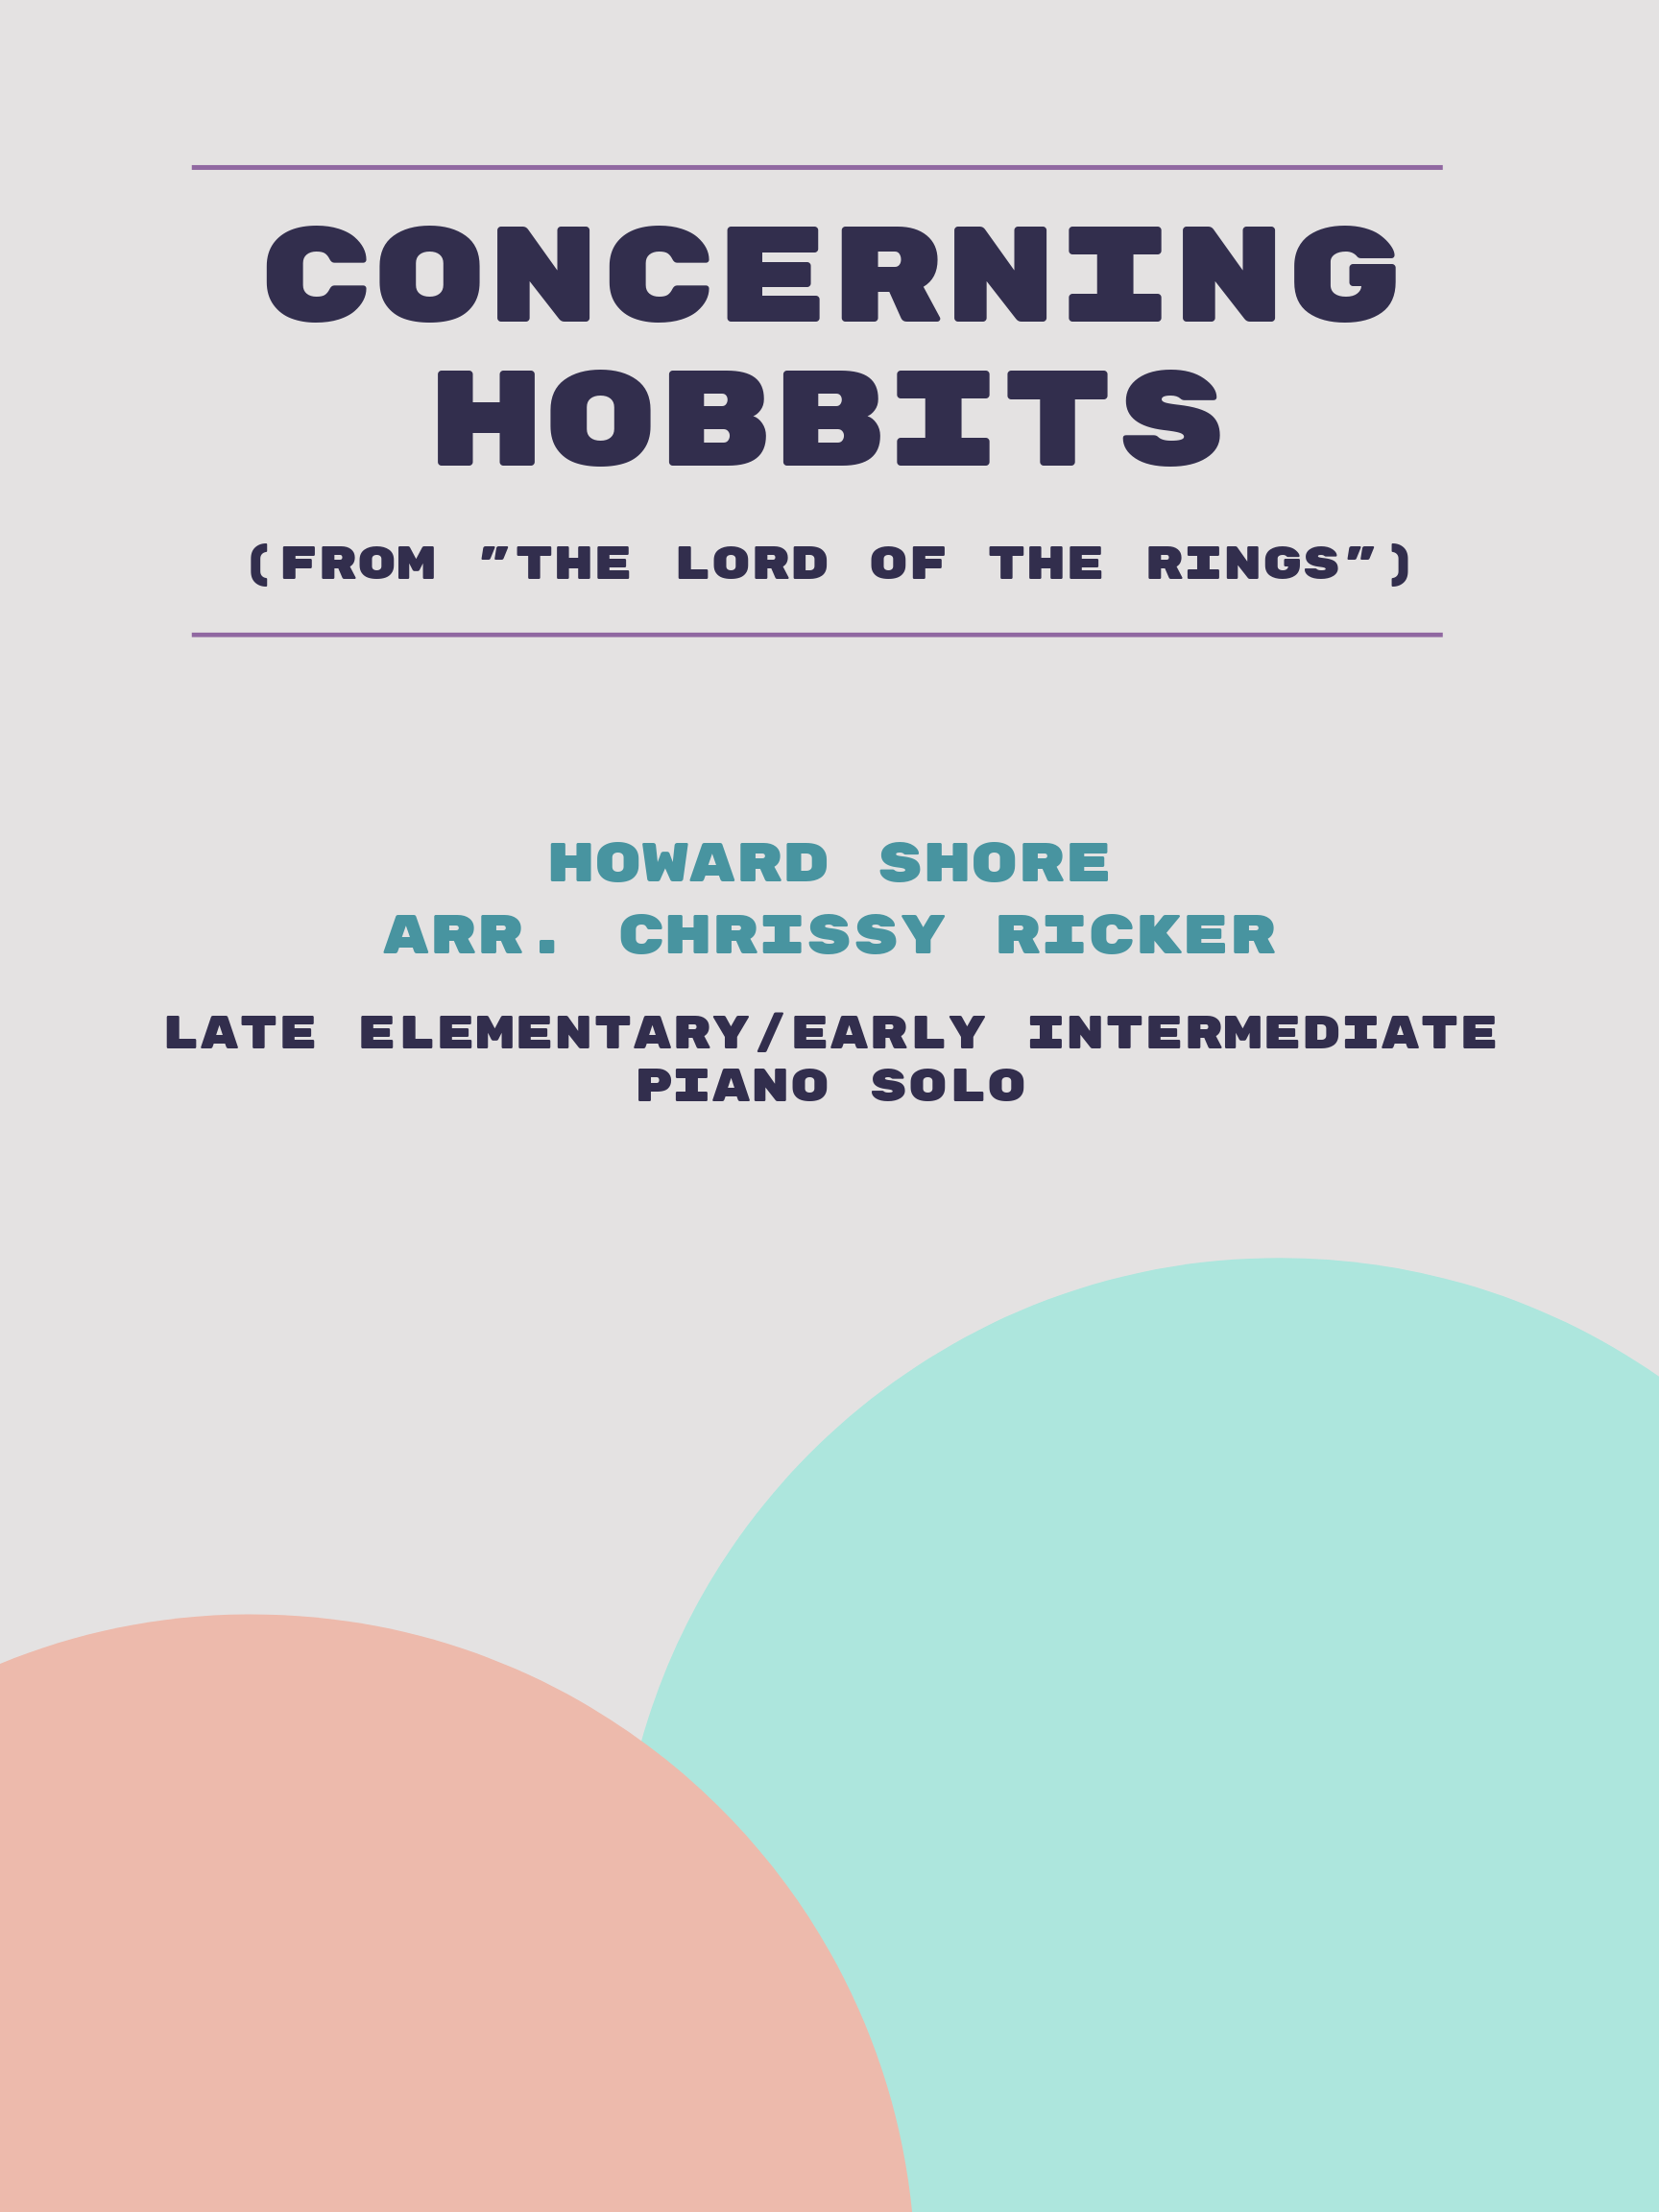 Concerning Hobbits by Howard Shore